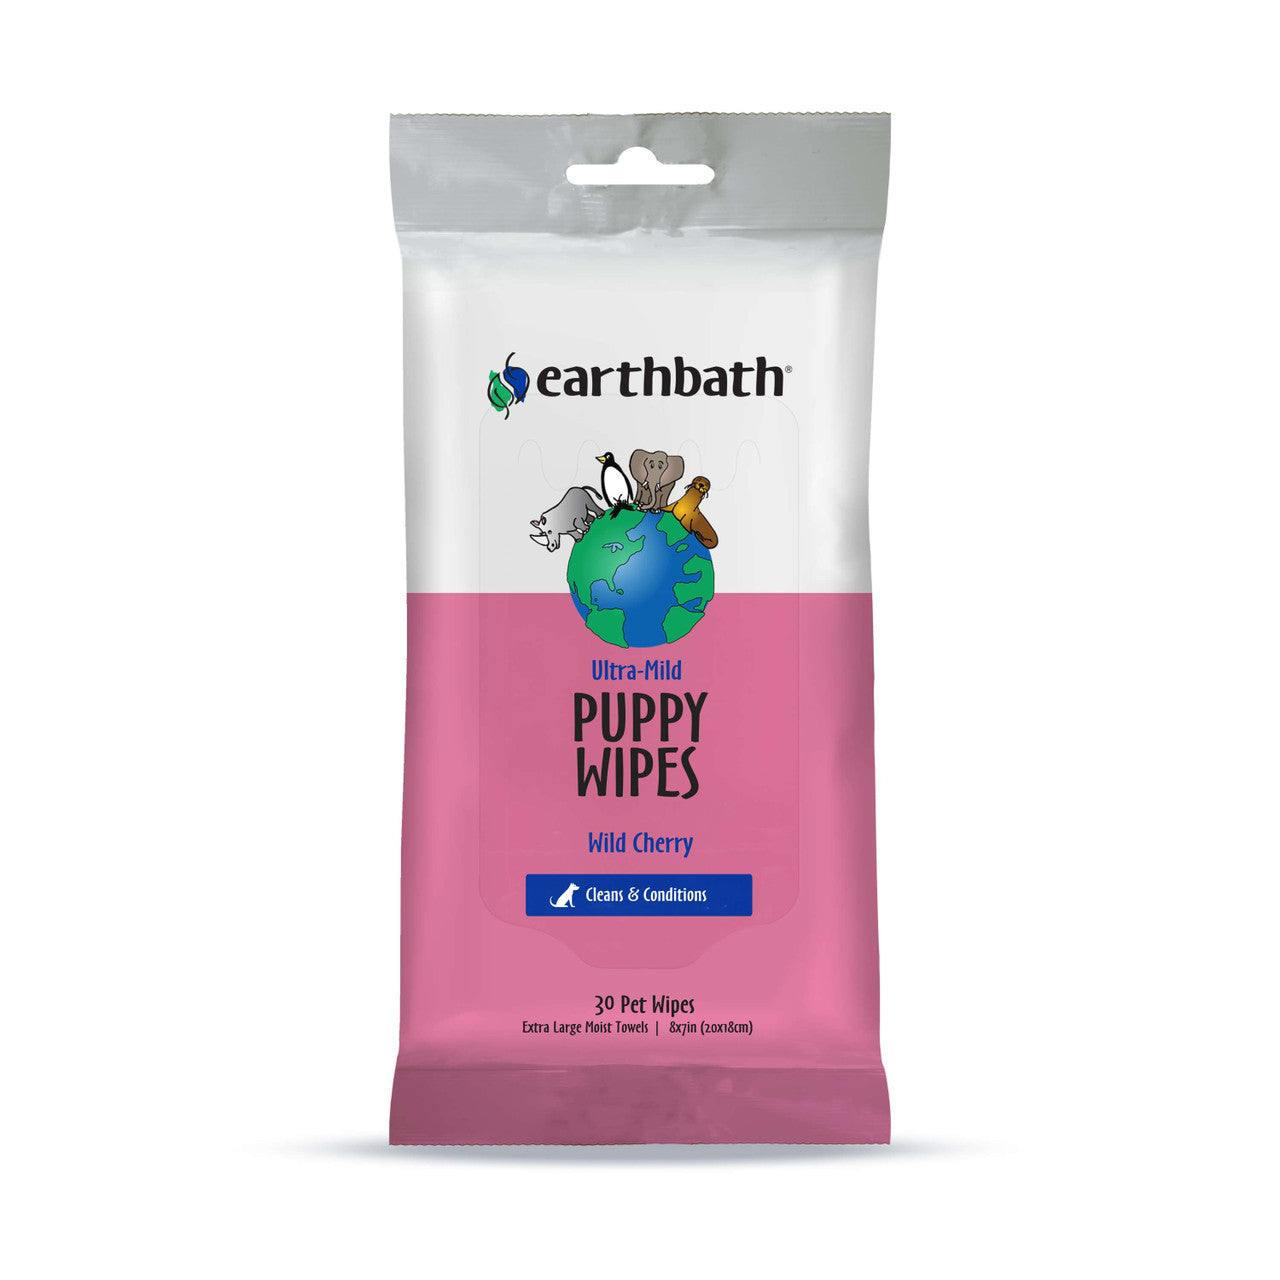 Earthbath Ultra-Mild Puppy Wipes, Wild Cherry 30ct